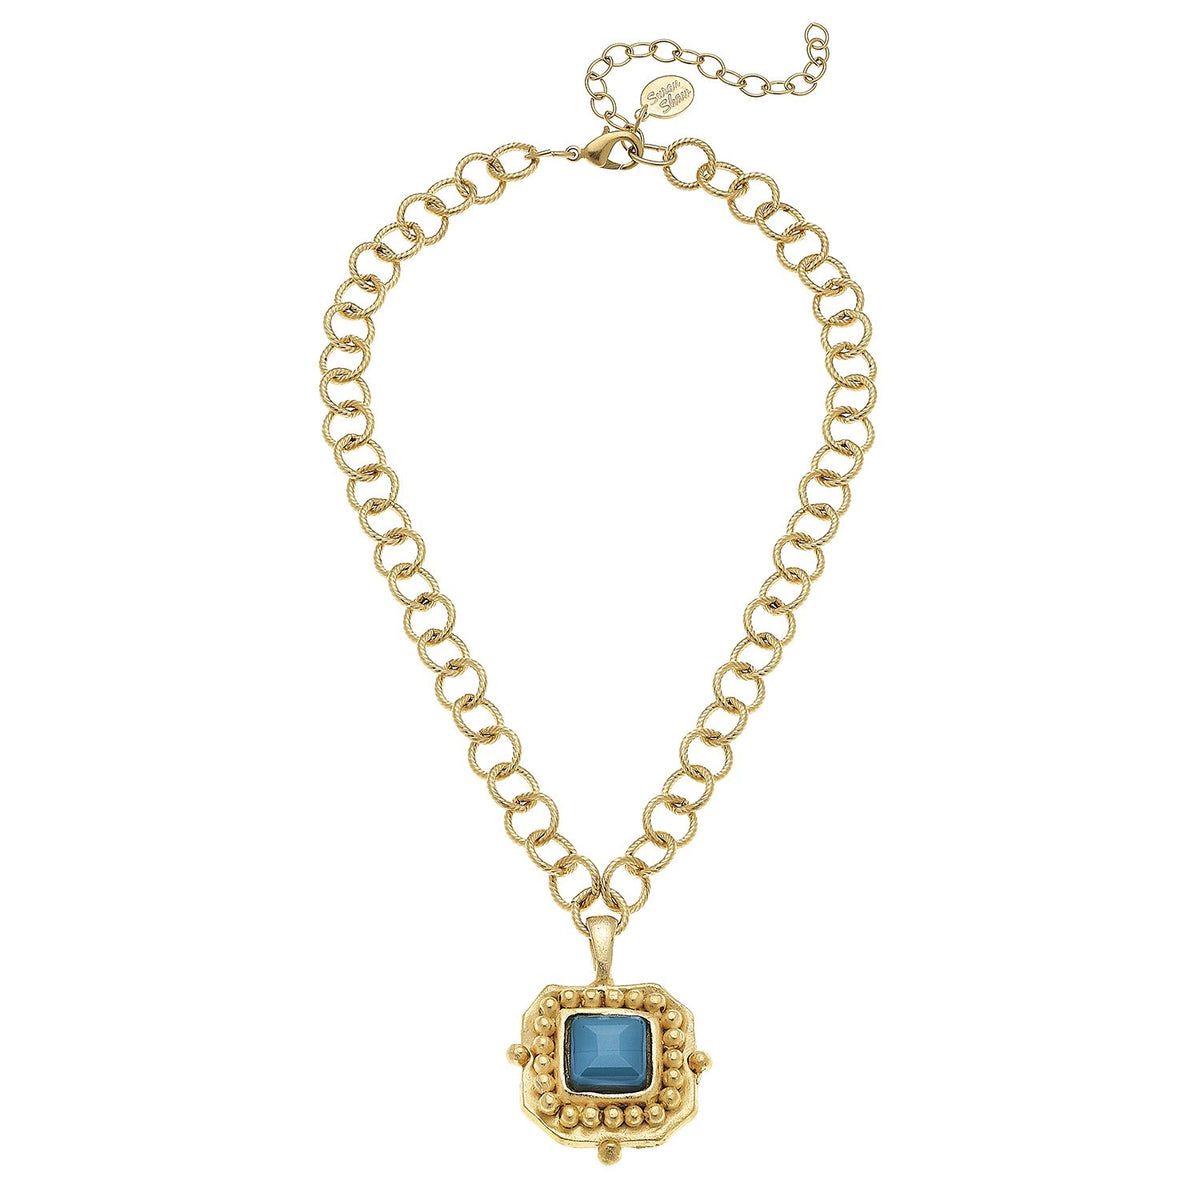 London Necklace – Aqua Crystal